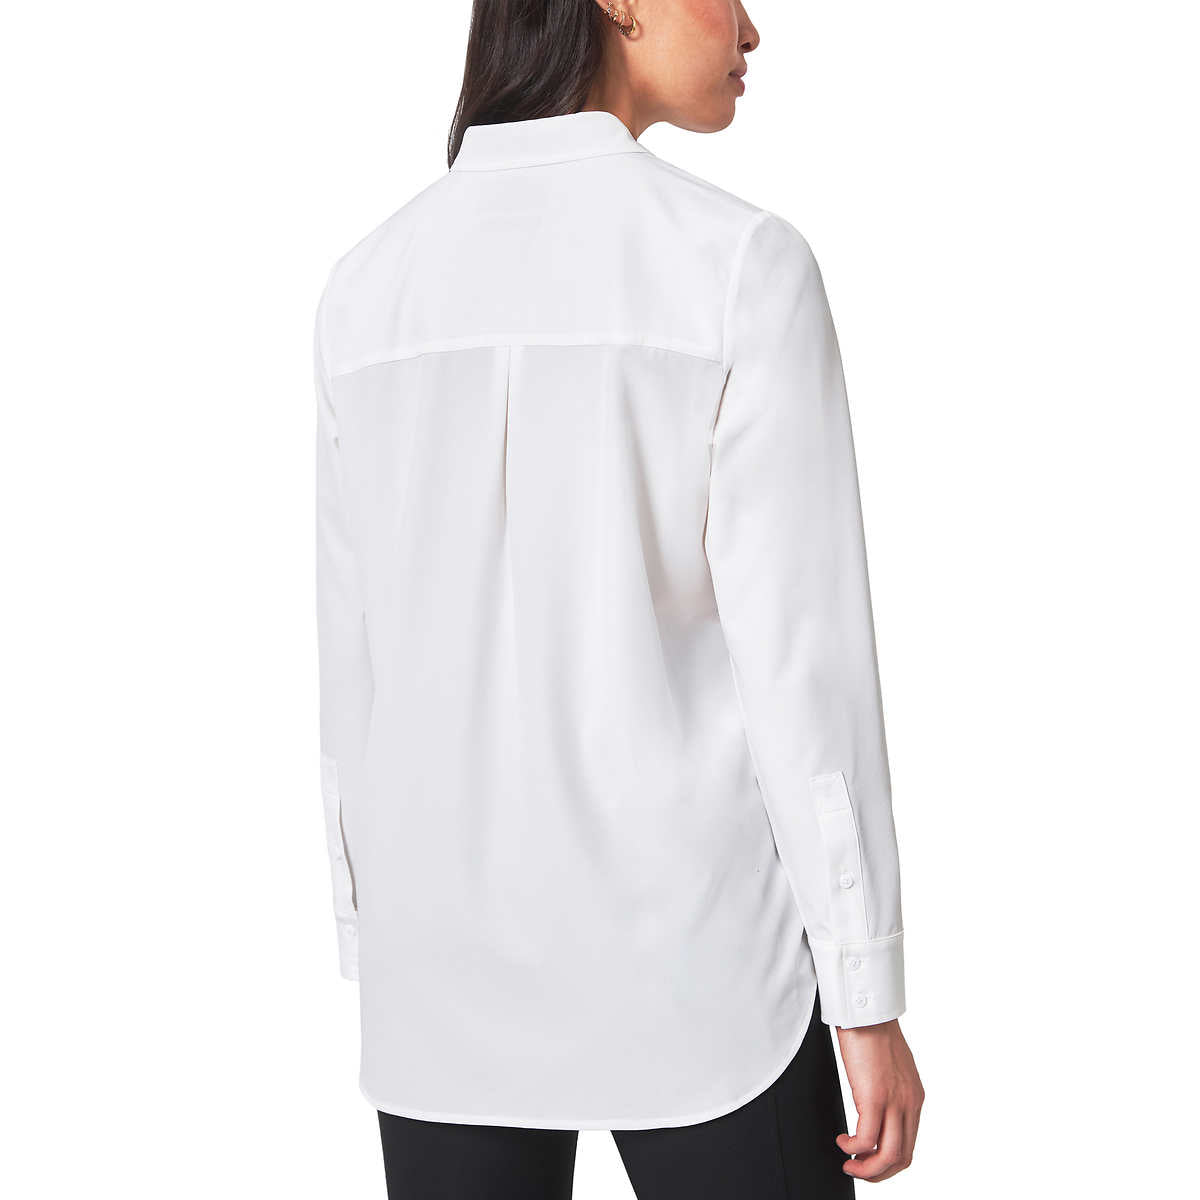 modern-ambition-chemise-femme-women's-shirt-voyage-travel-2